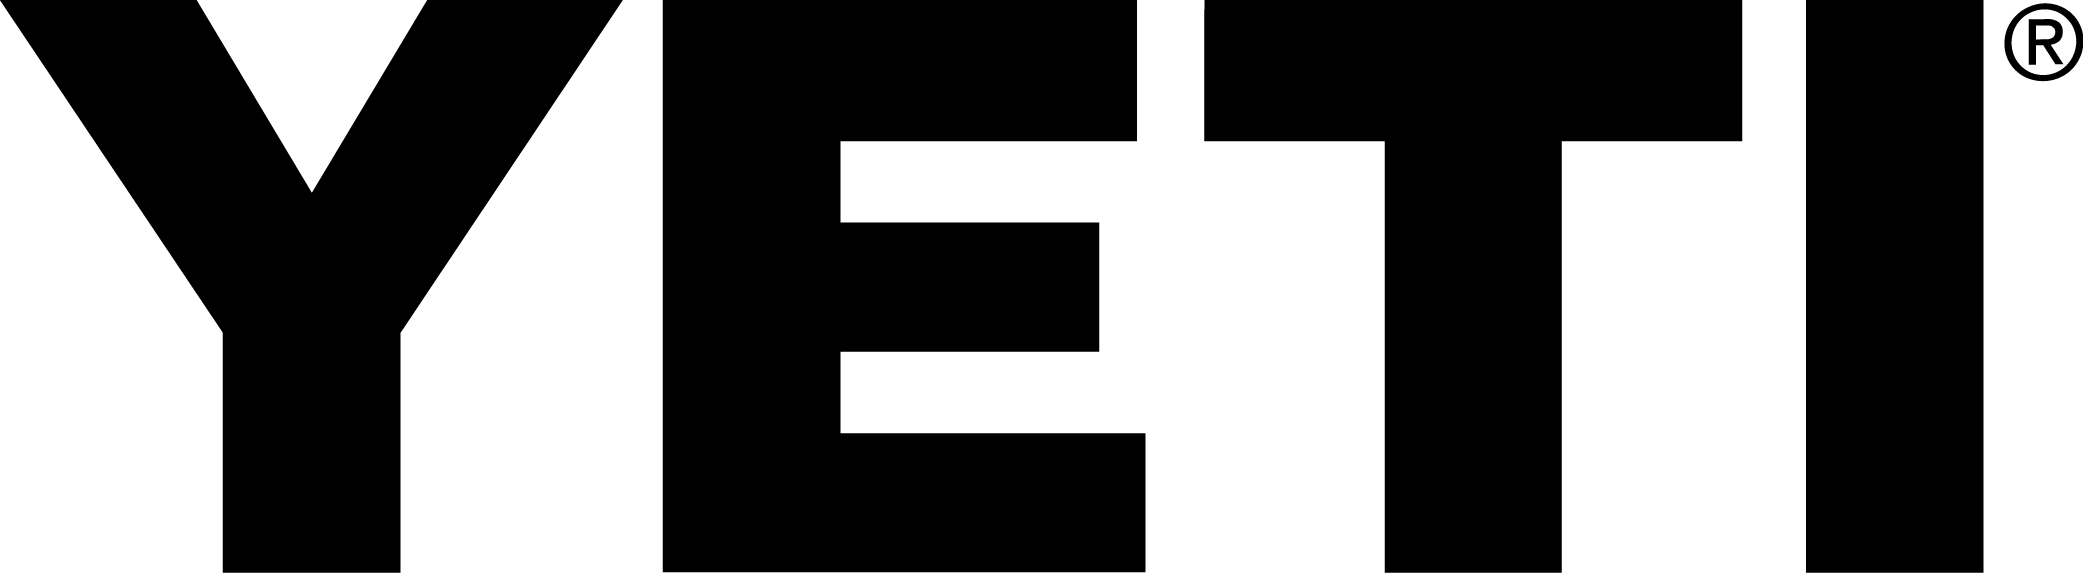 Yeti Logo - Yeti Logo Vector Free Download